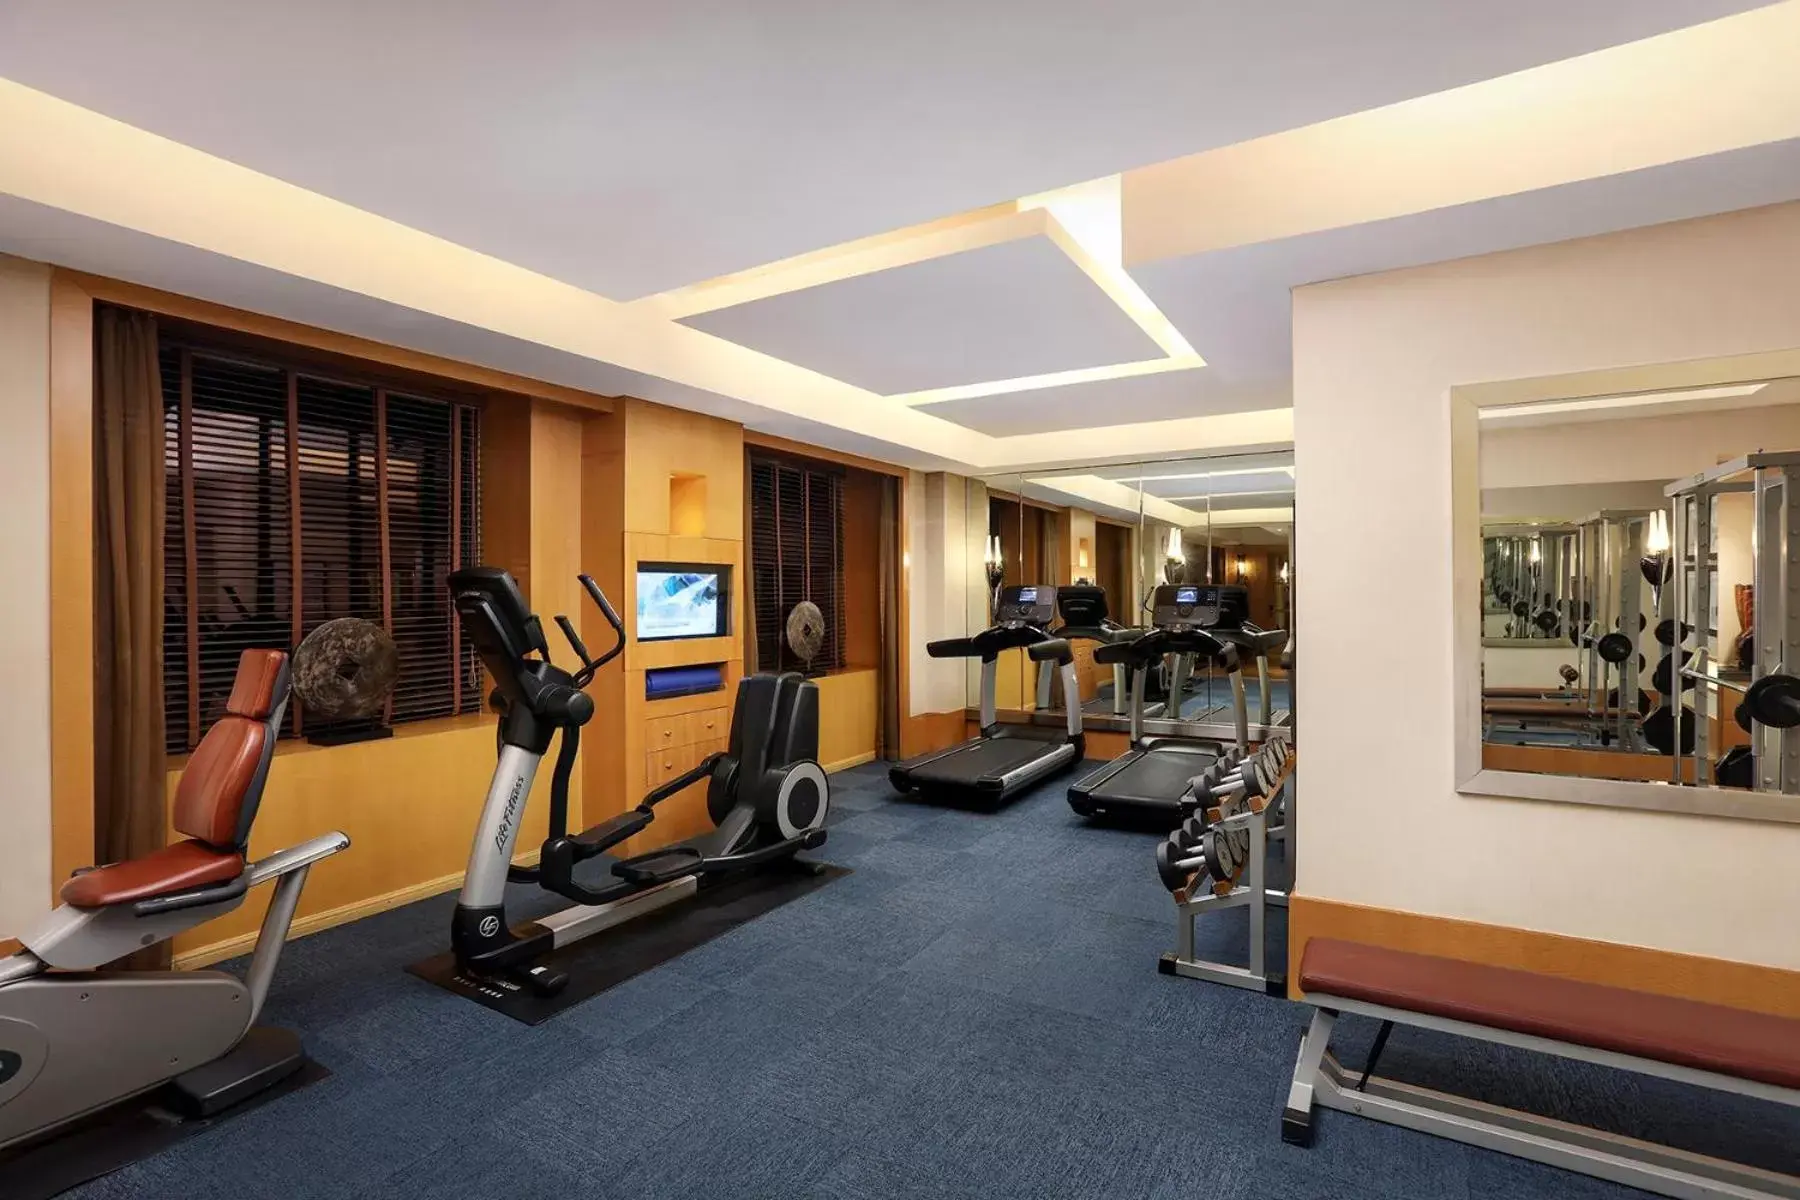 Fitness centre/facilities, Fitness Center/Facilities in Park Plaza Beijing Wangfujing